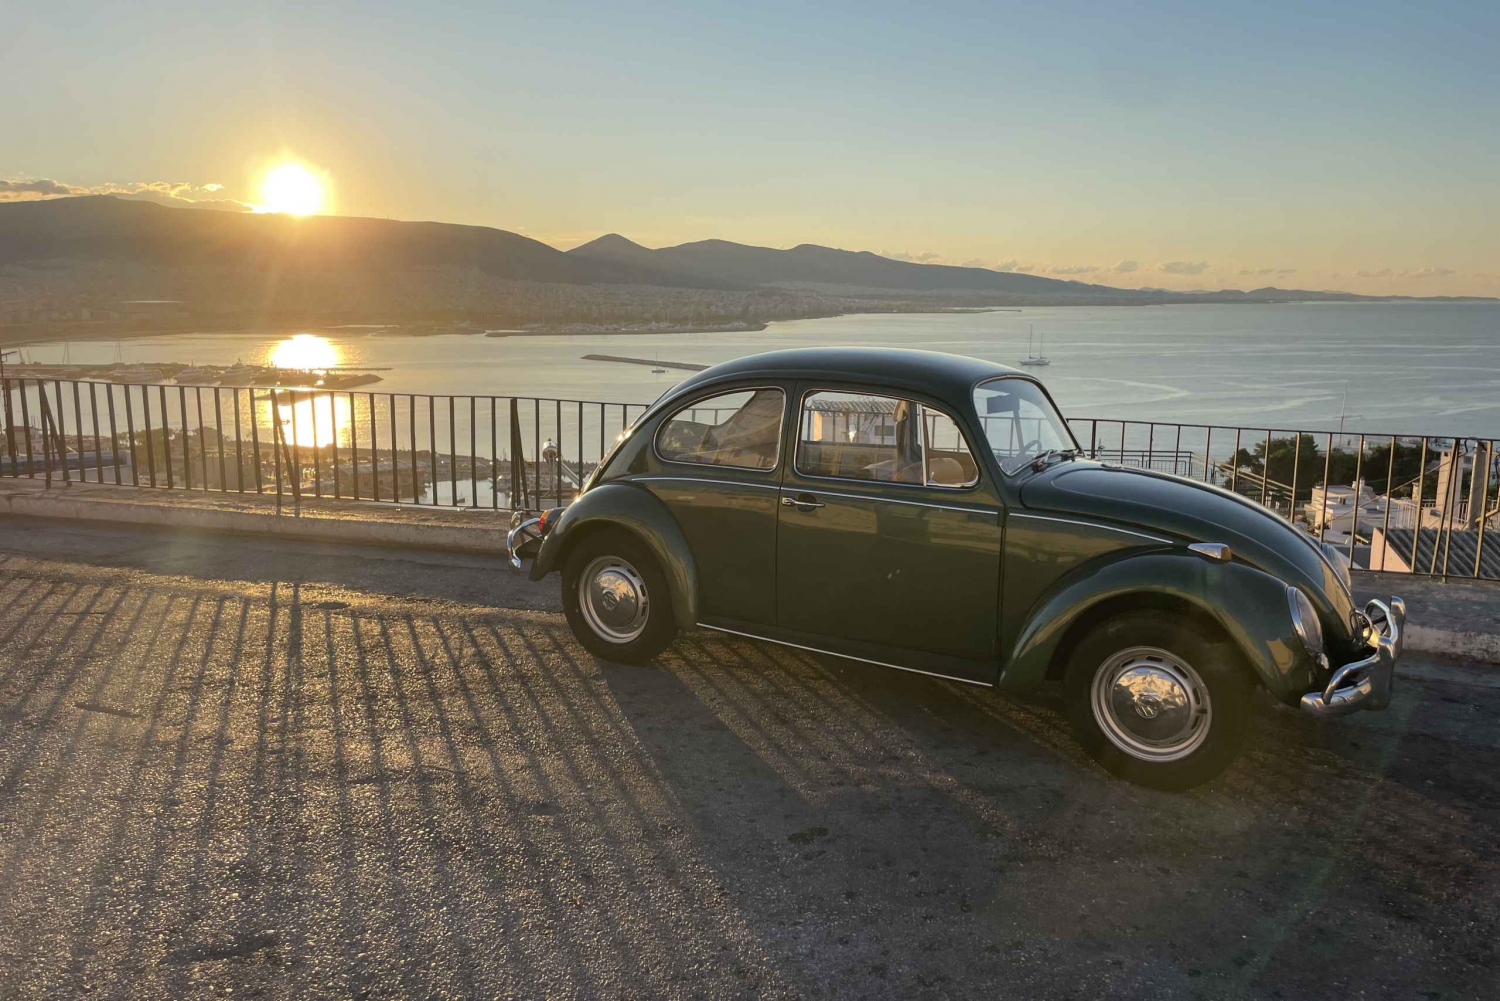 Athens Riviera: Fun photo tour with a vintage car